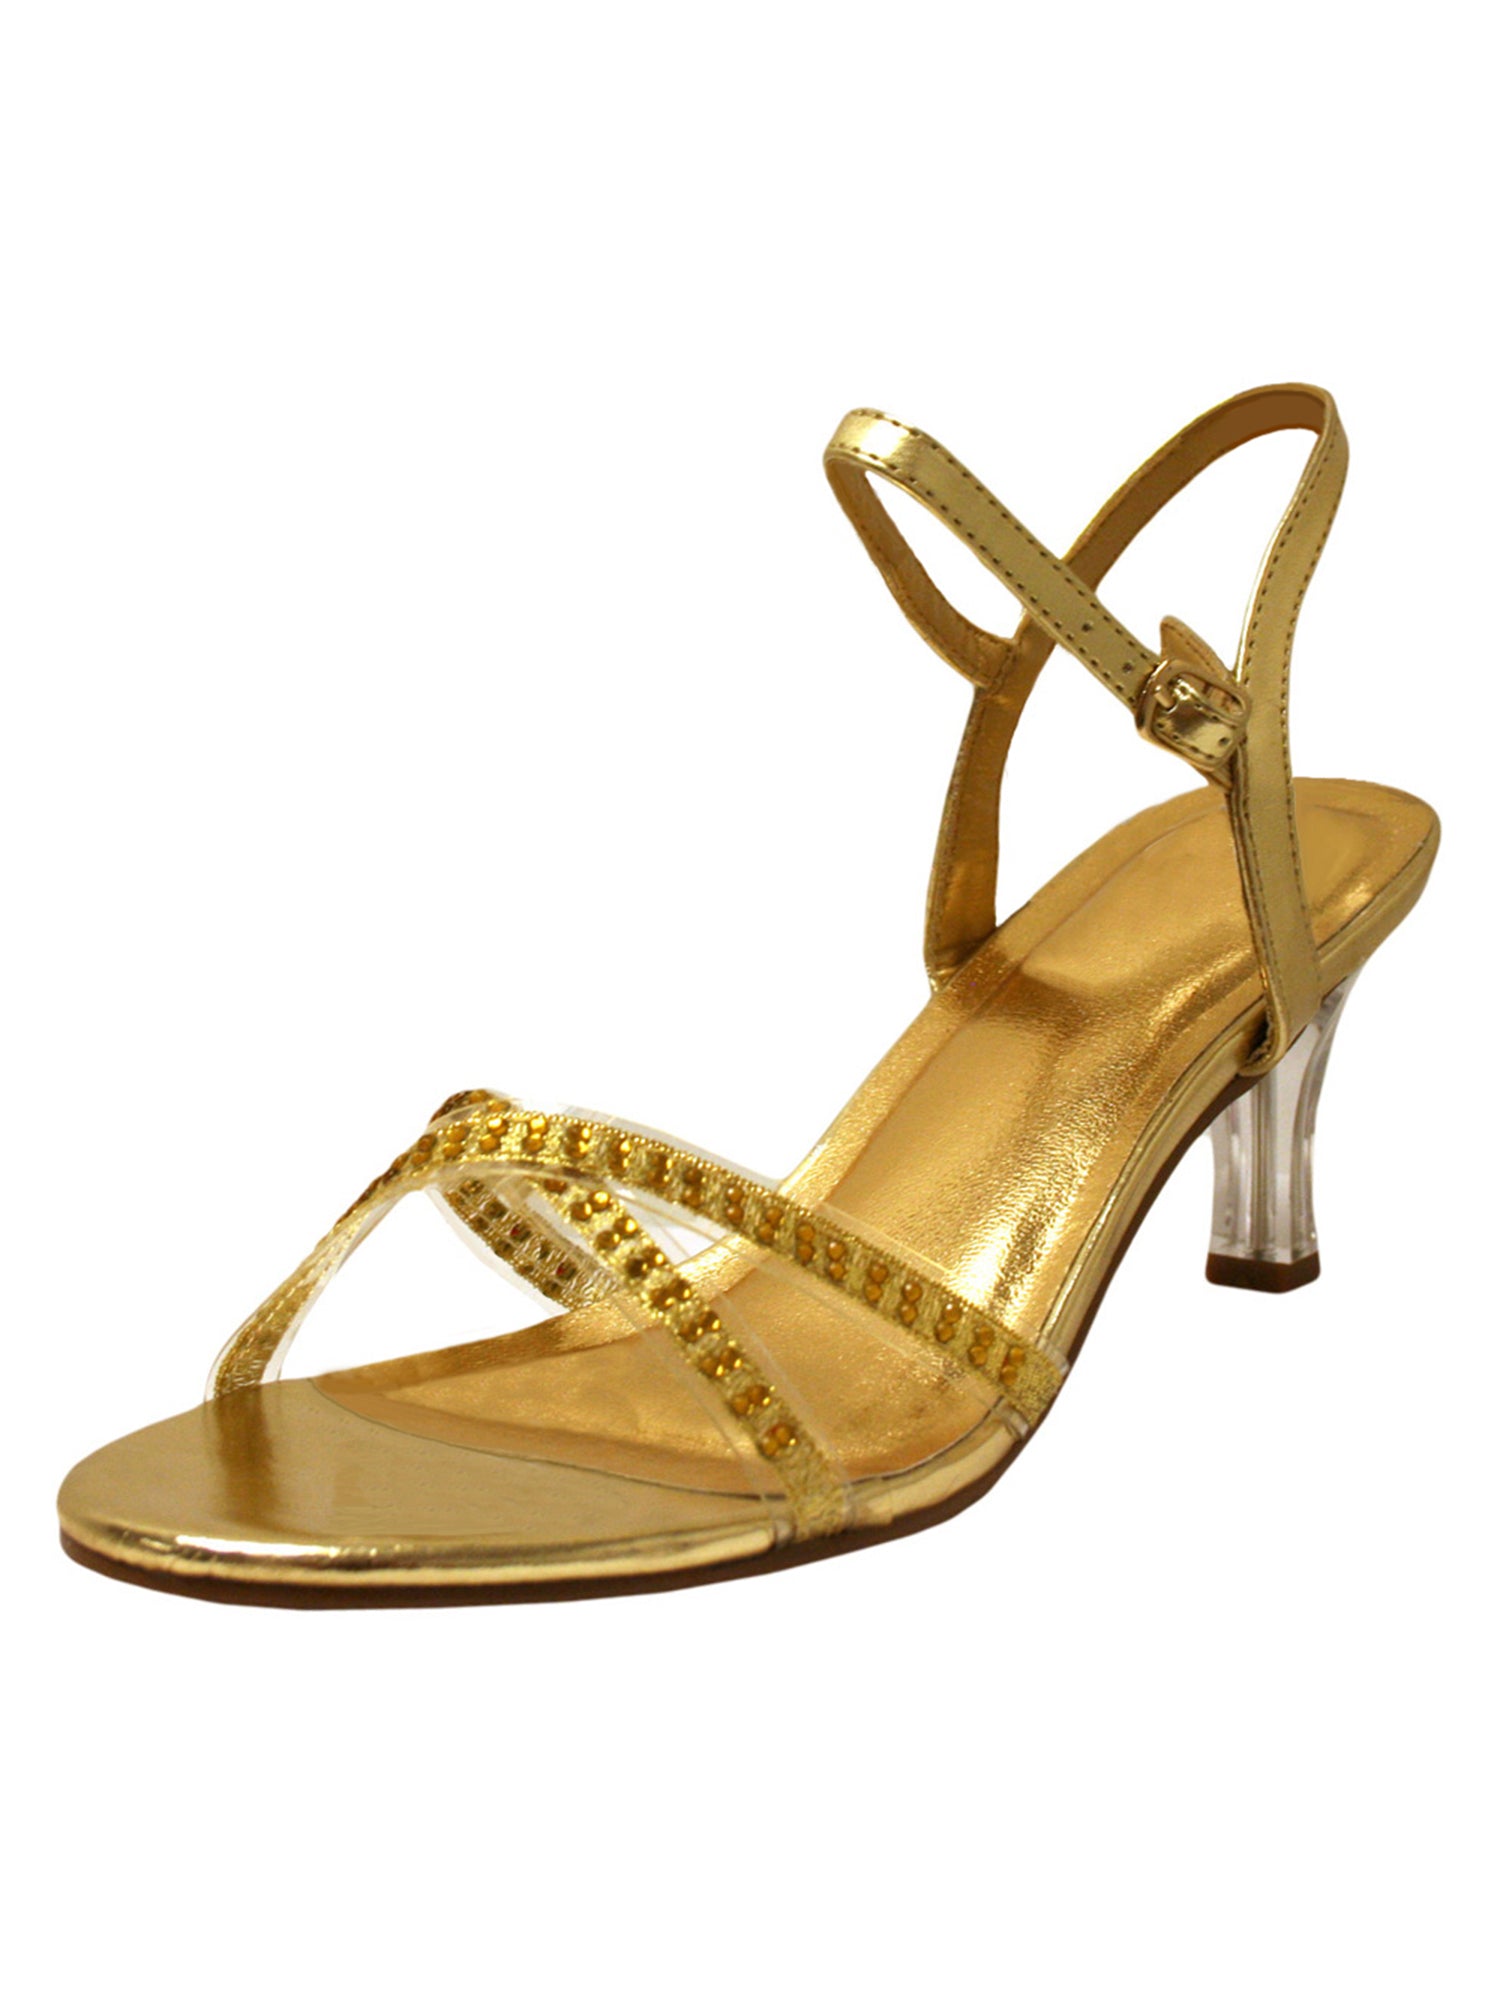 Gold Sandal Heels For Women With Rhinestones Size 7.5 – Luxury Divas